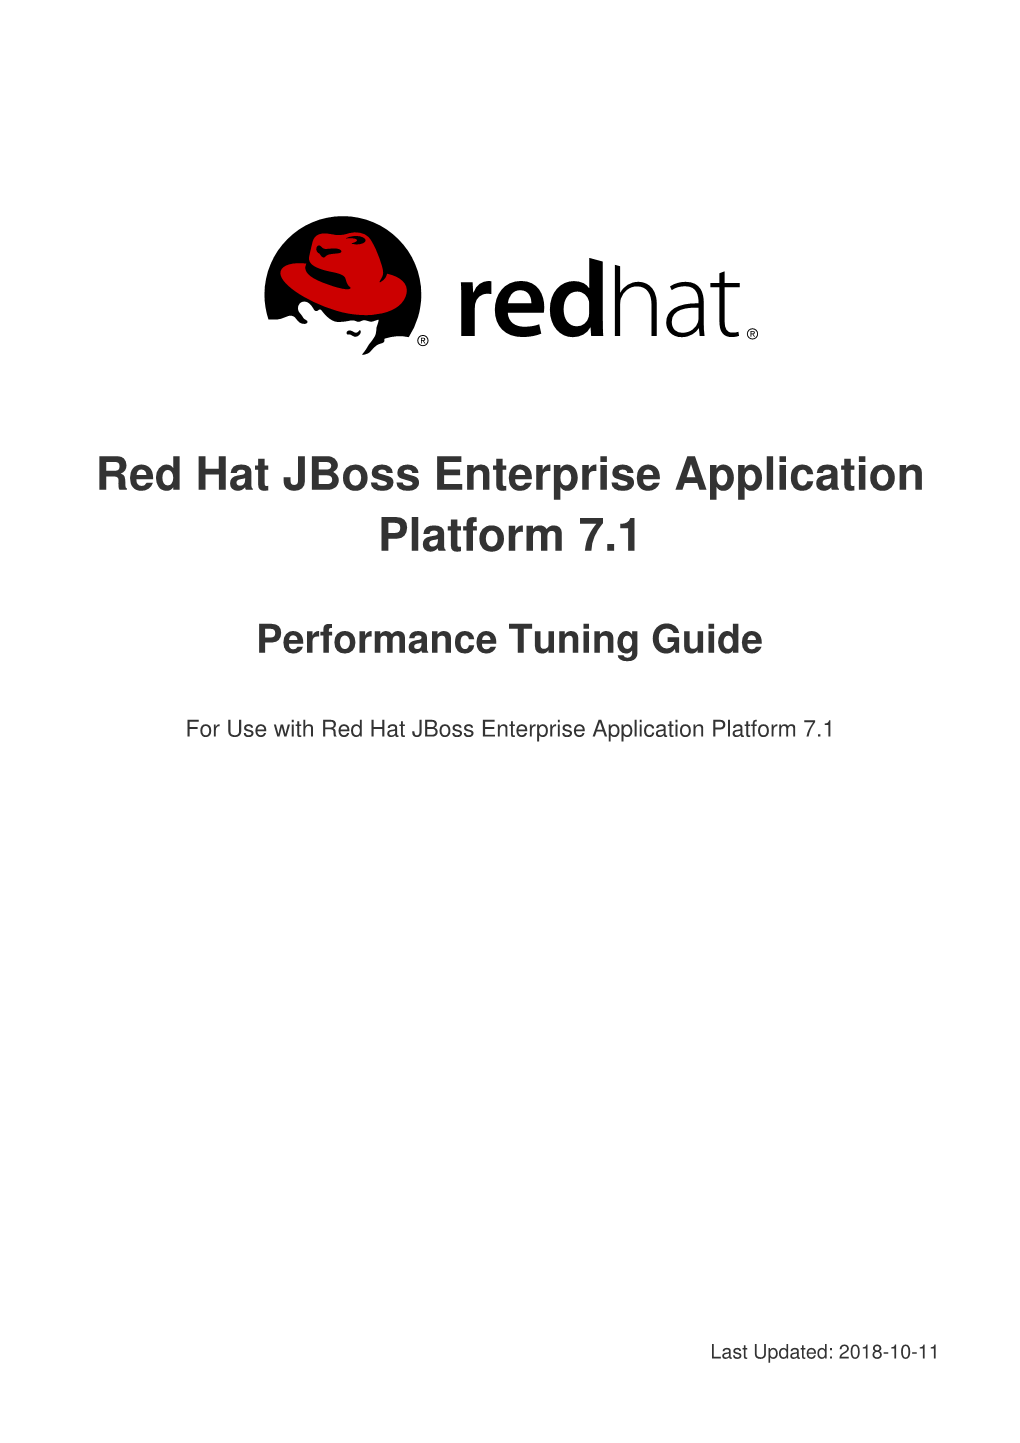 Red Hat Jboss Enterprise Application Platform 7.1 Performance Tuning Guide